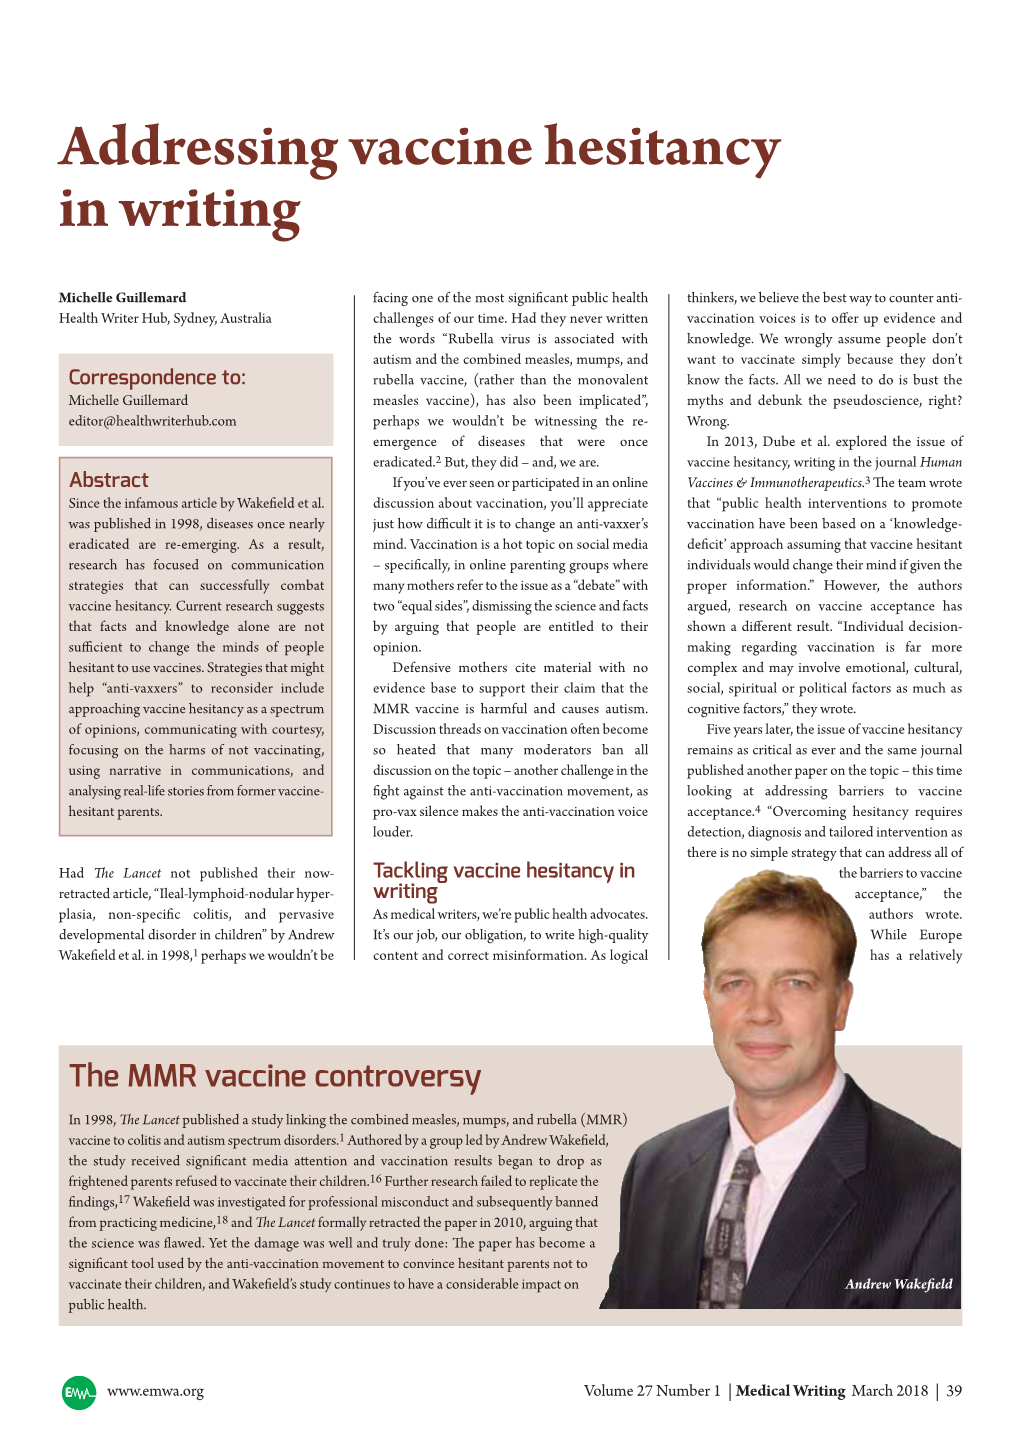 Addressing Vaccine Hesitancy in Writing